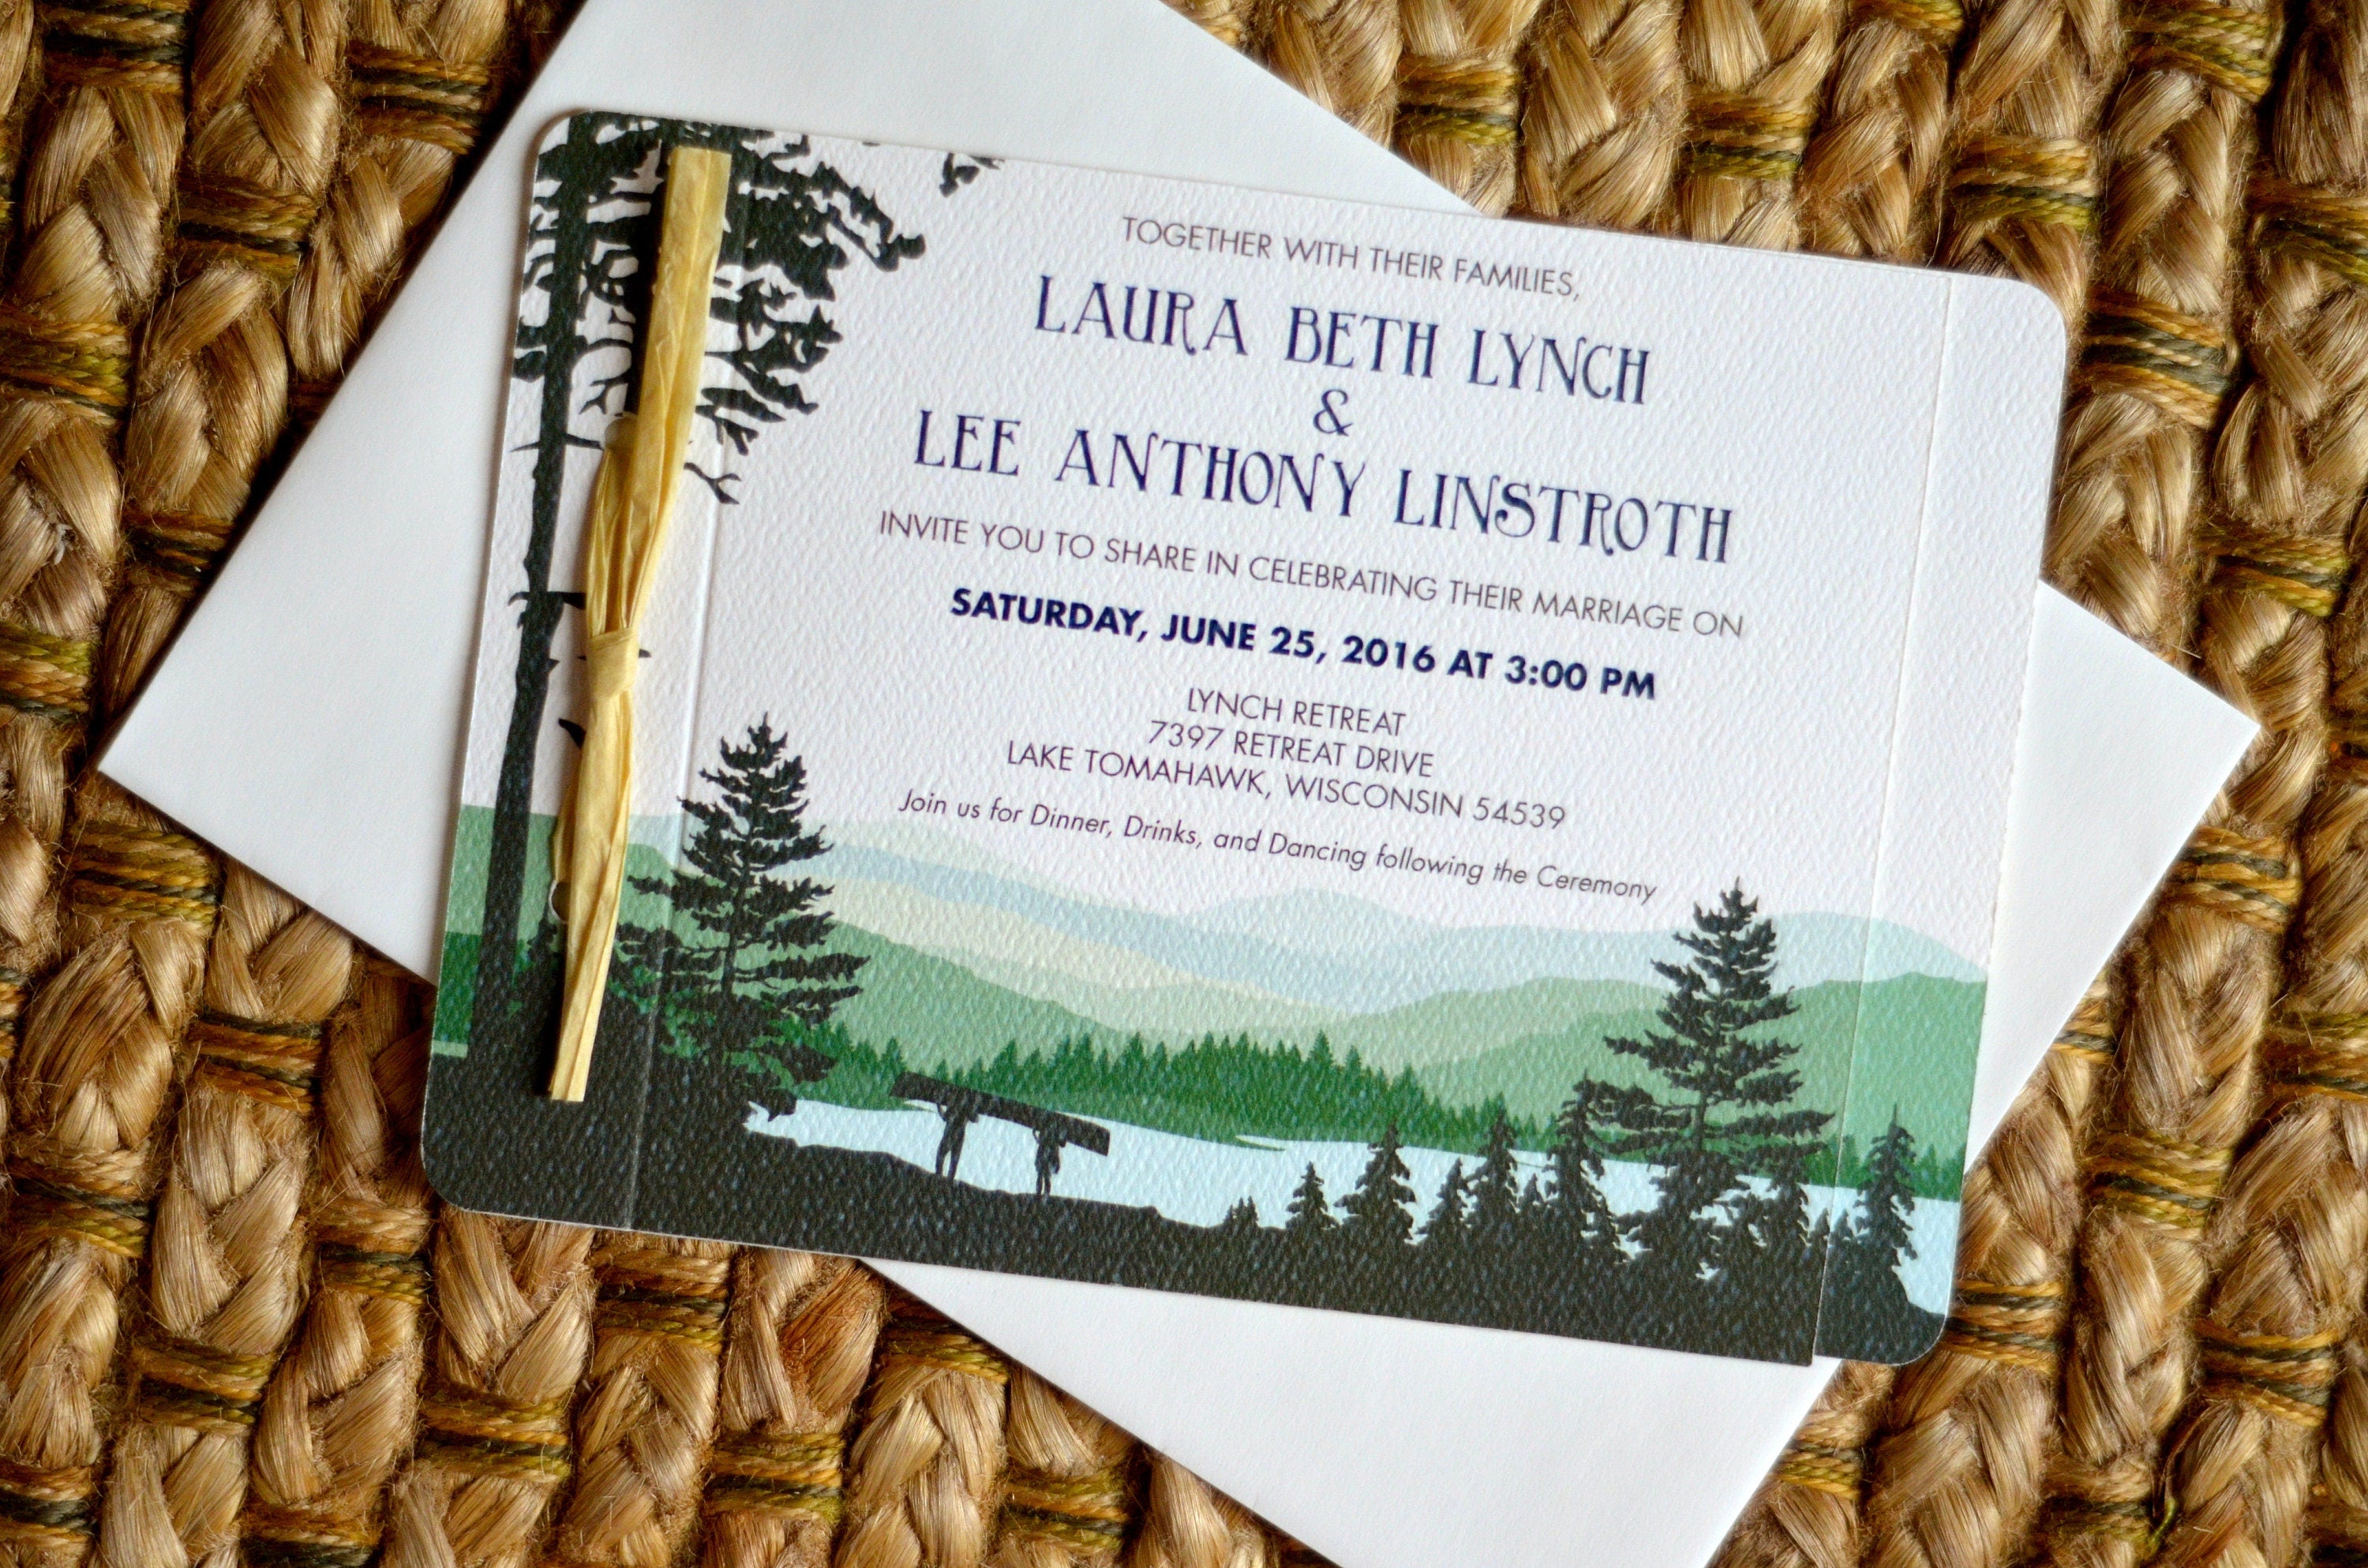 Catskill Mountains 2pg Livret Booklet Wedding Invitation with A7 Envelopes - New York Appalachian Invitation - Green Rolling Hills